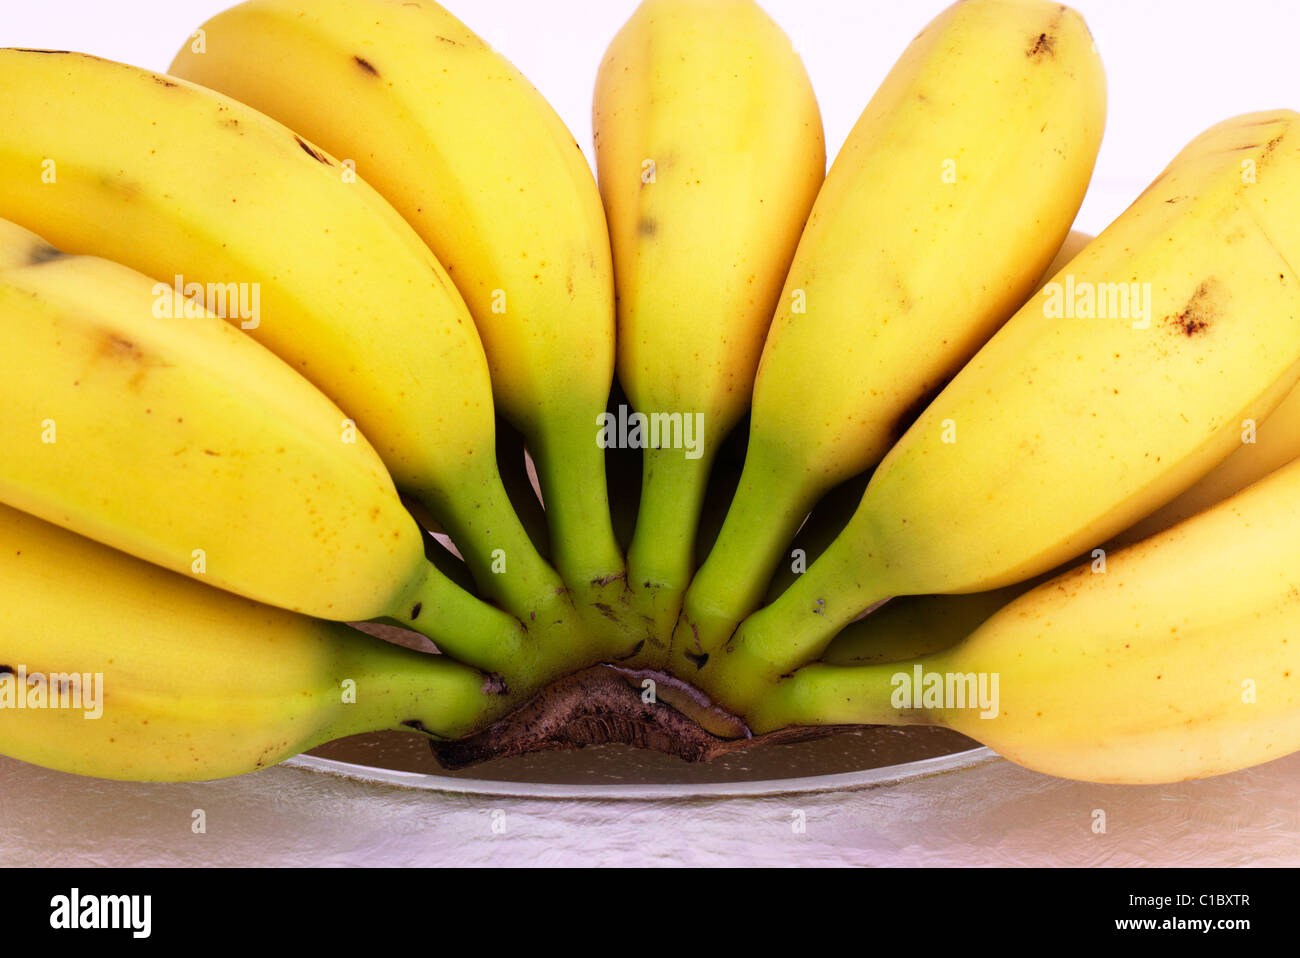 https://c8.alamy.com/comp/C1BXTR/big-bunch-of-bananas-C1BXTR.jpg